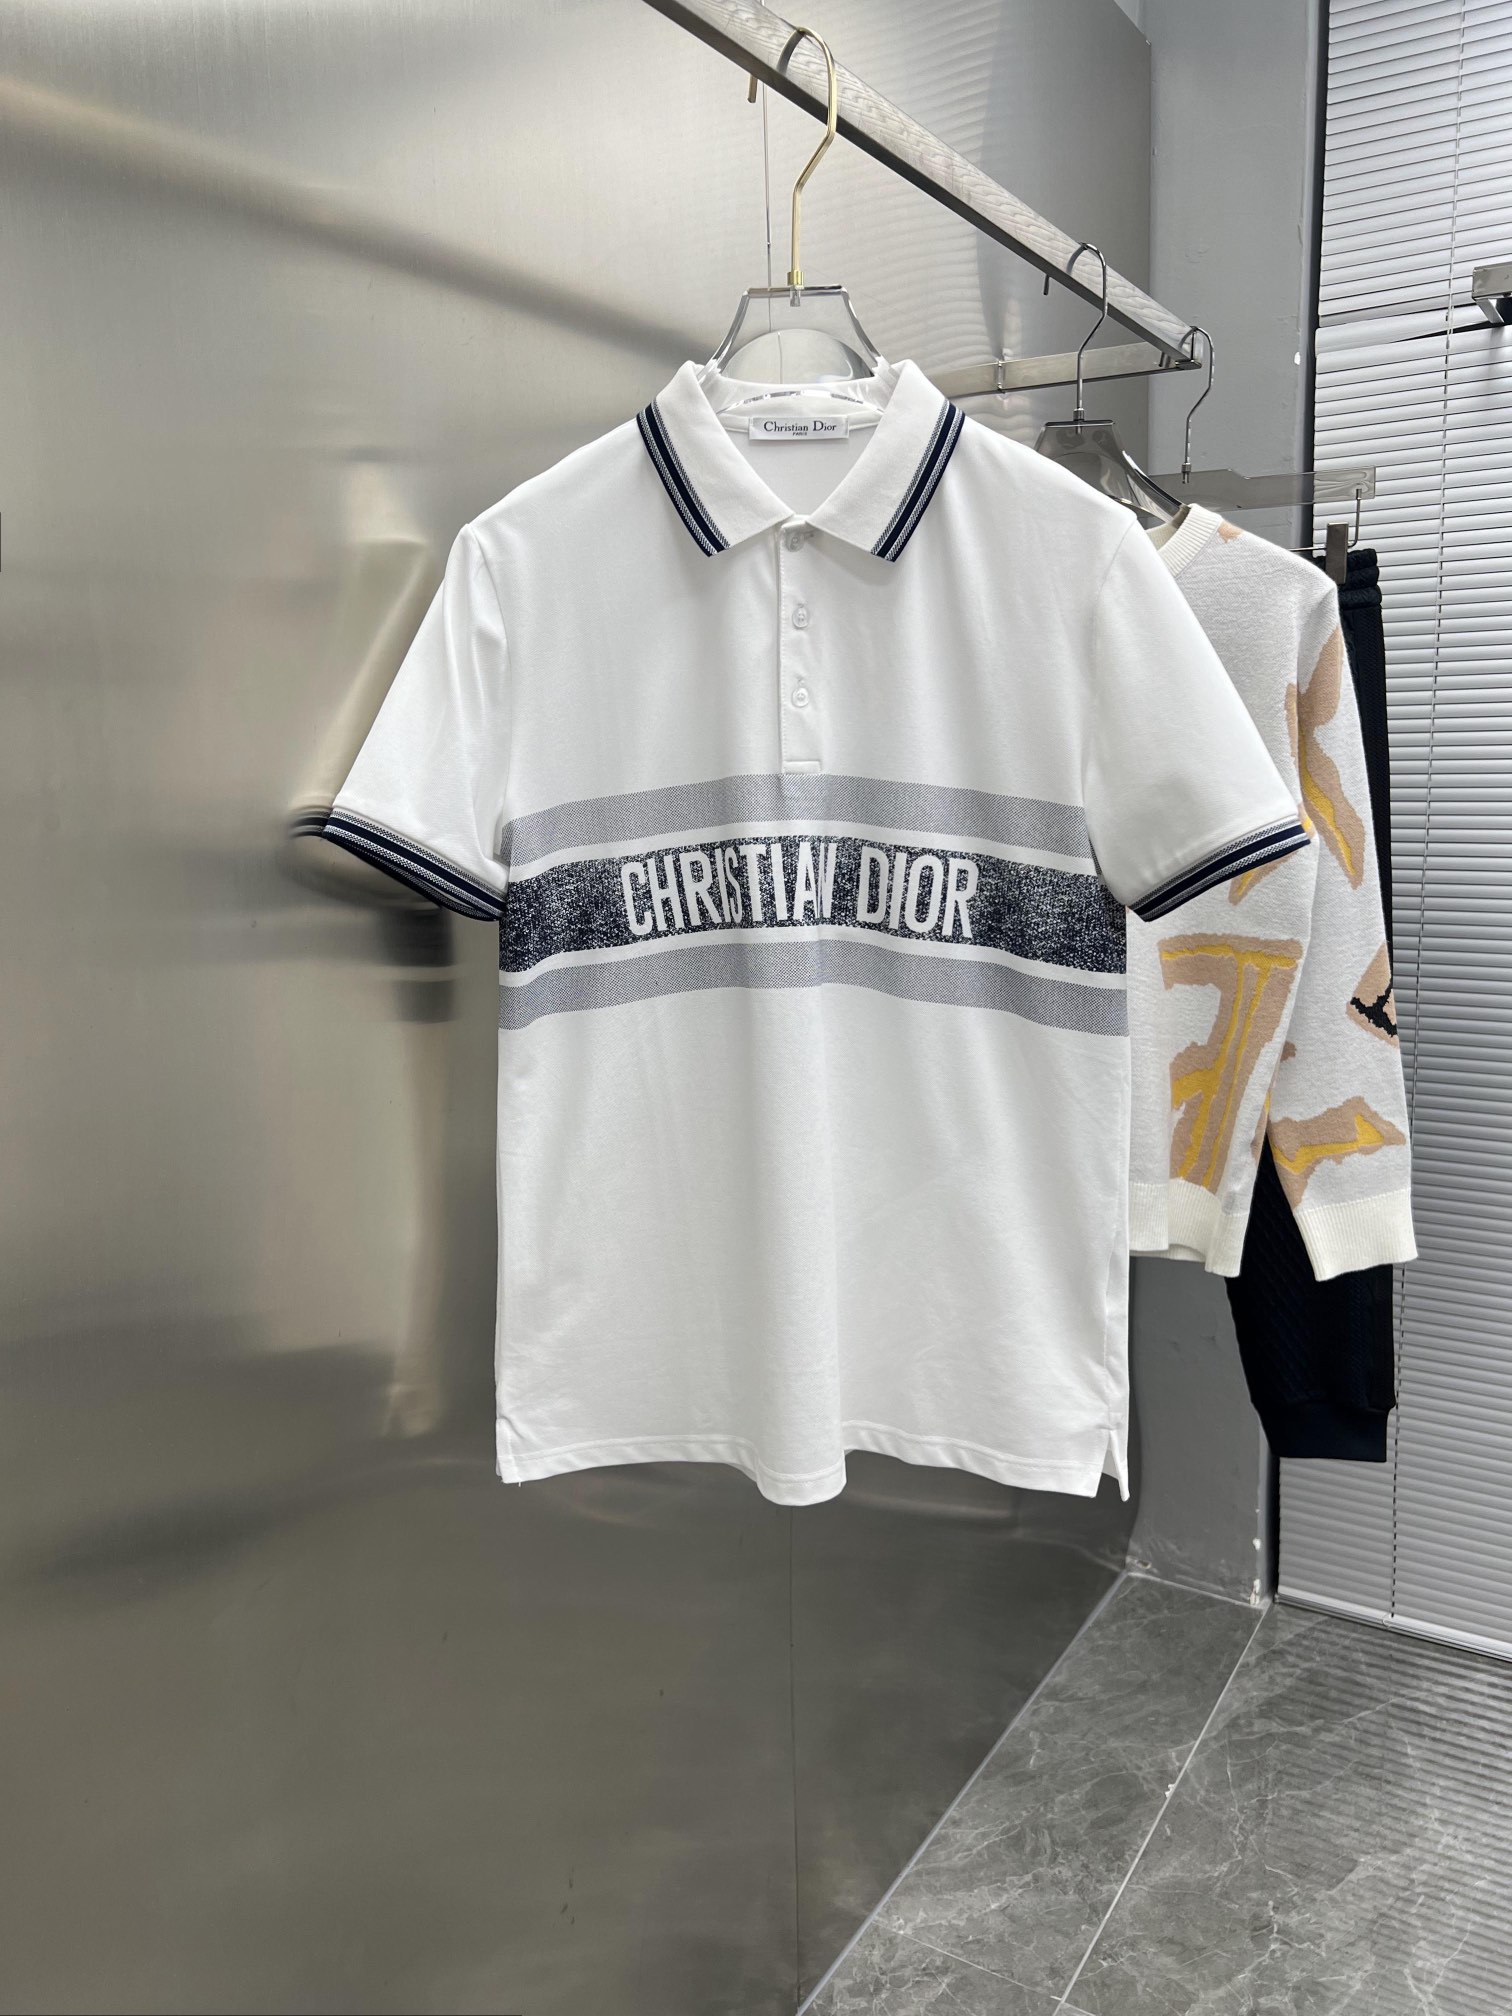 Dior Clothing Polo T-Shirt Men Summer Collection Short Sleeve